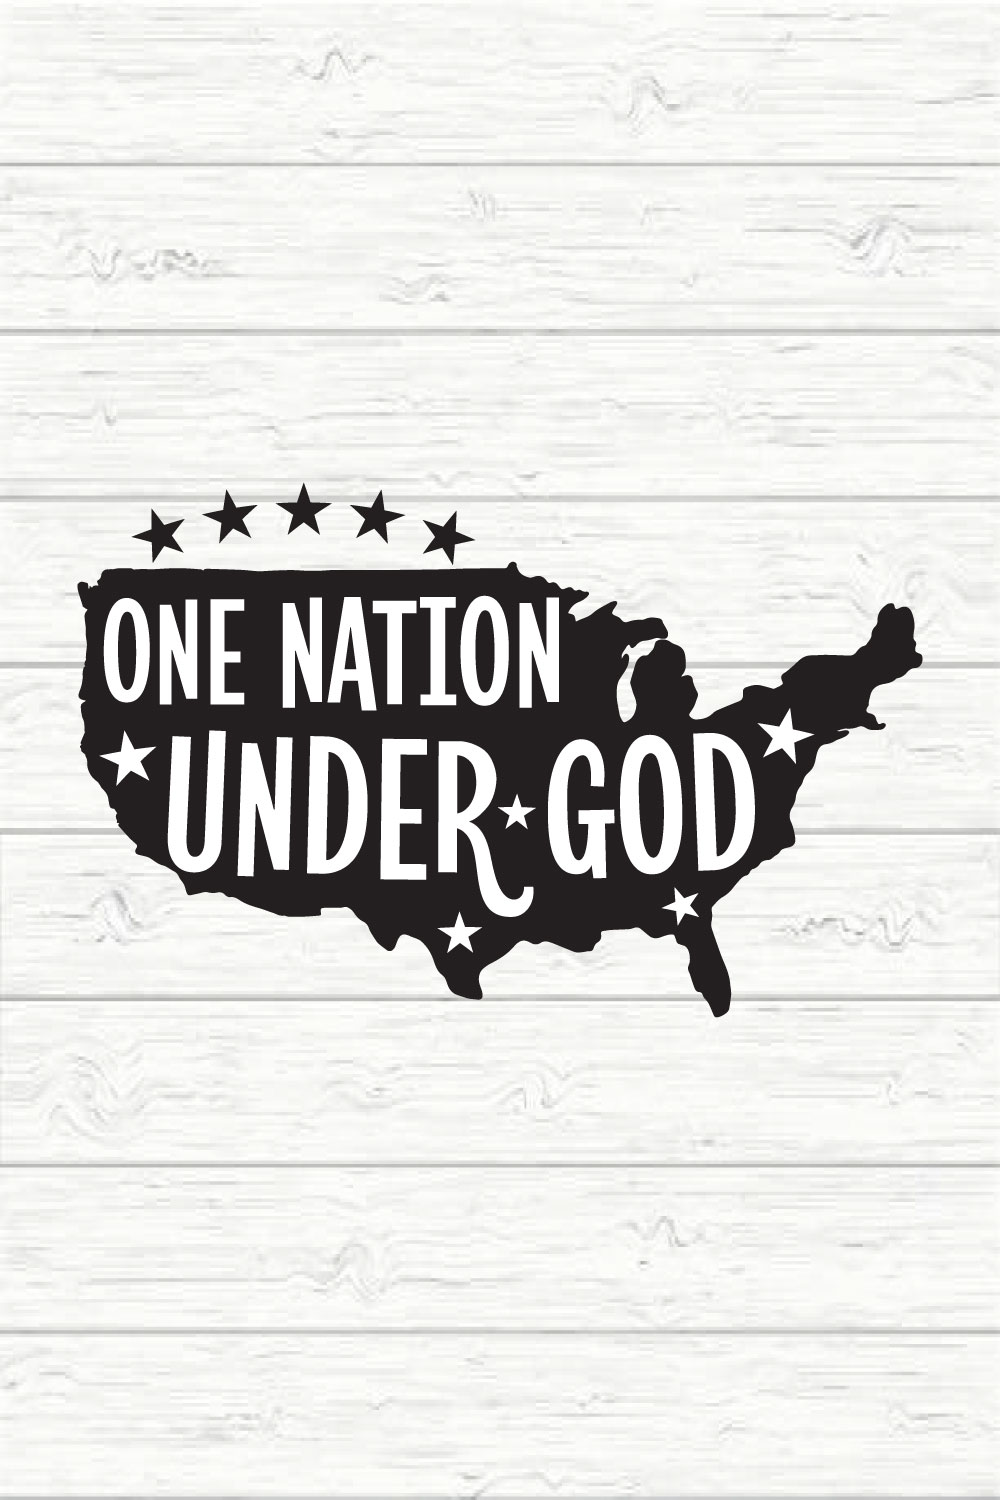 One Nation Under God pinterest preview image.